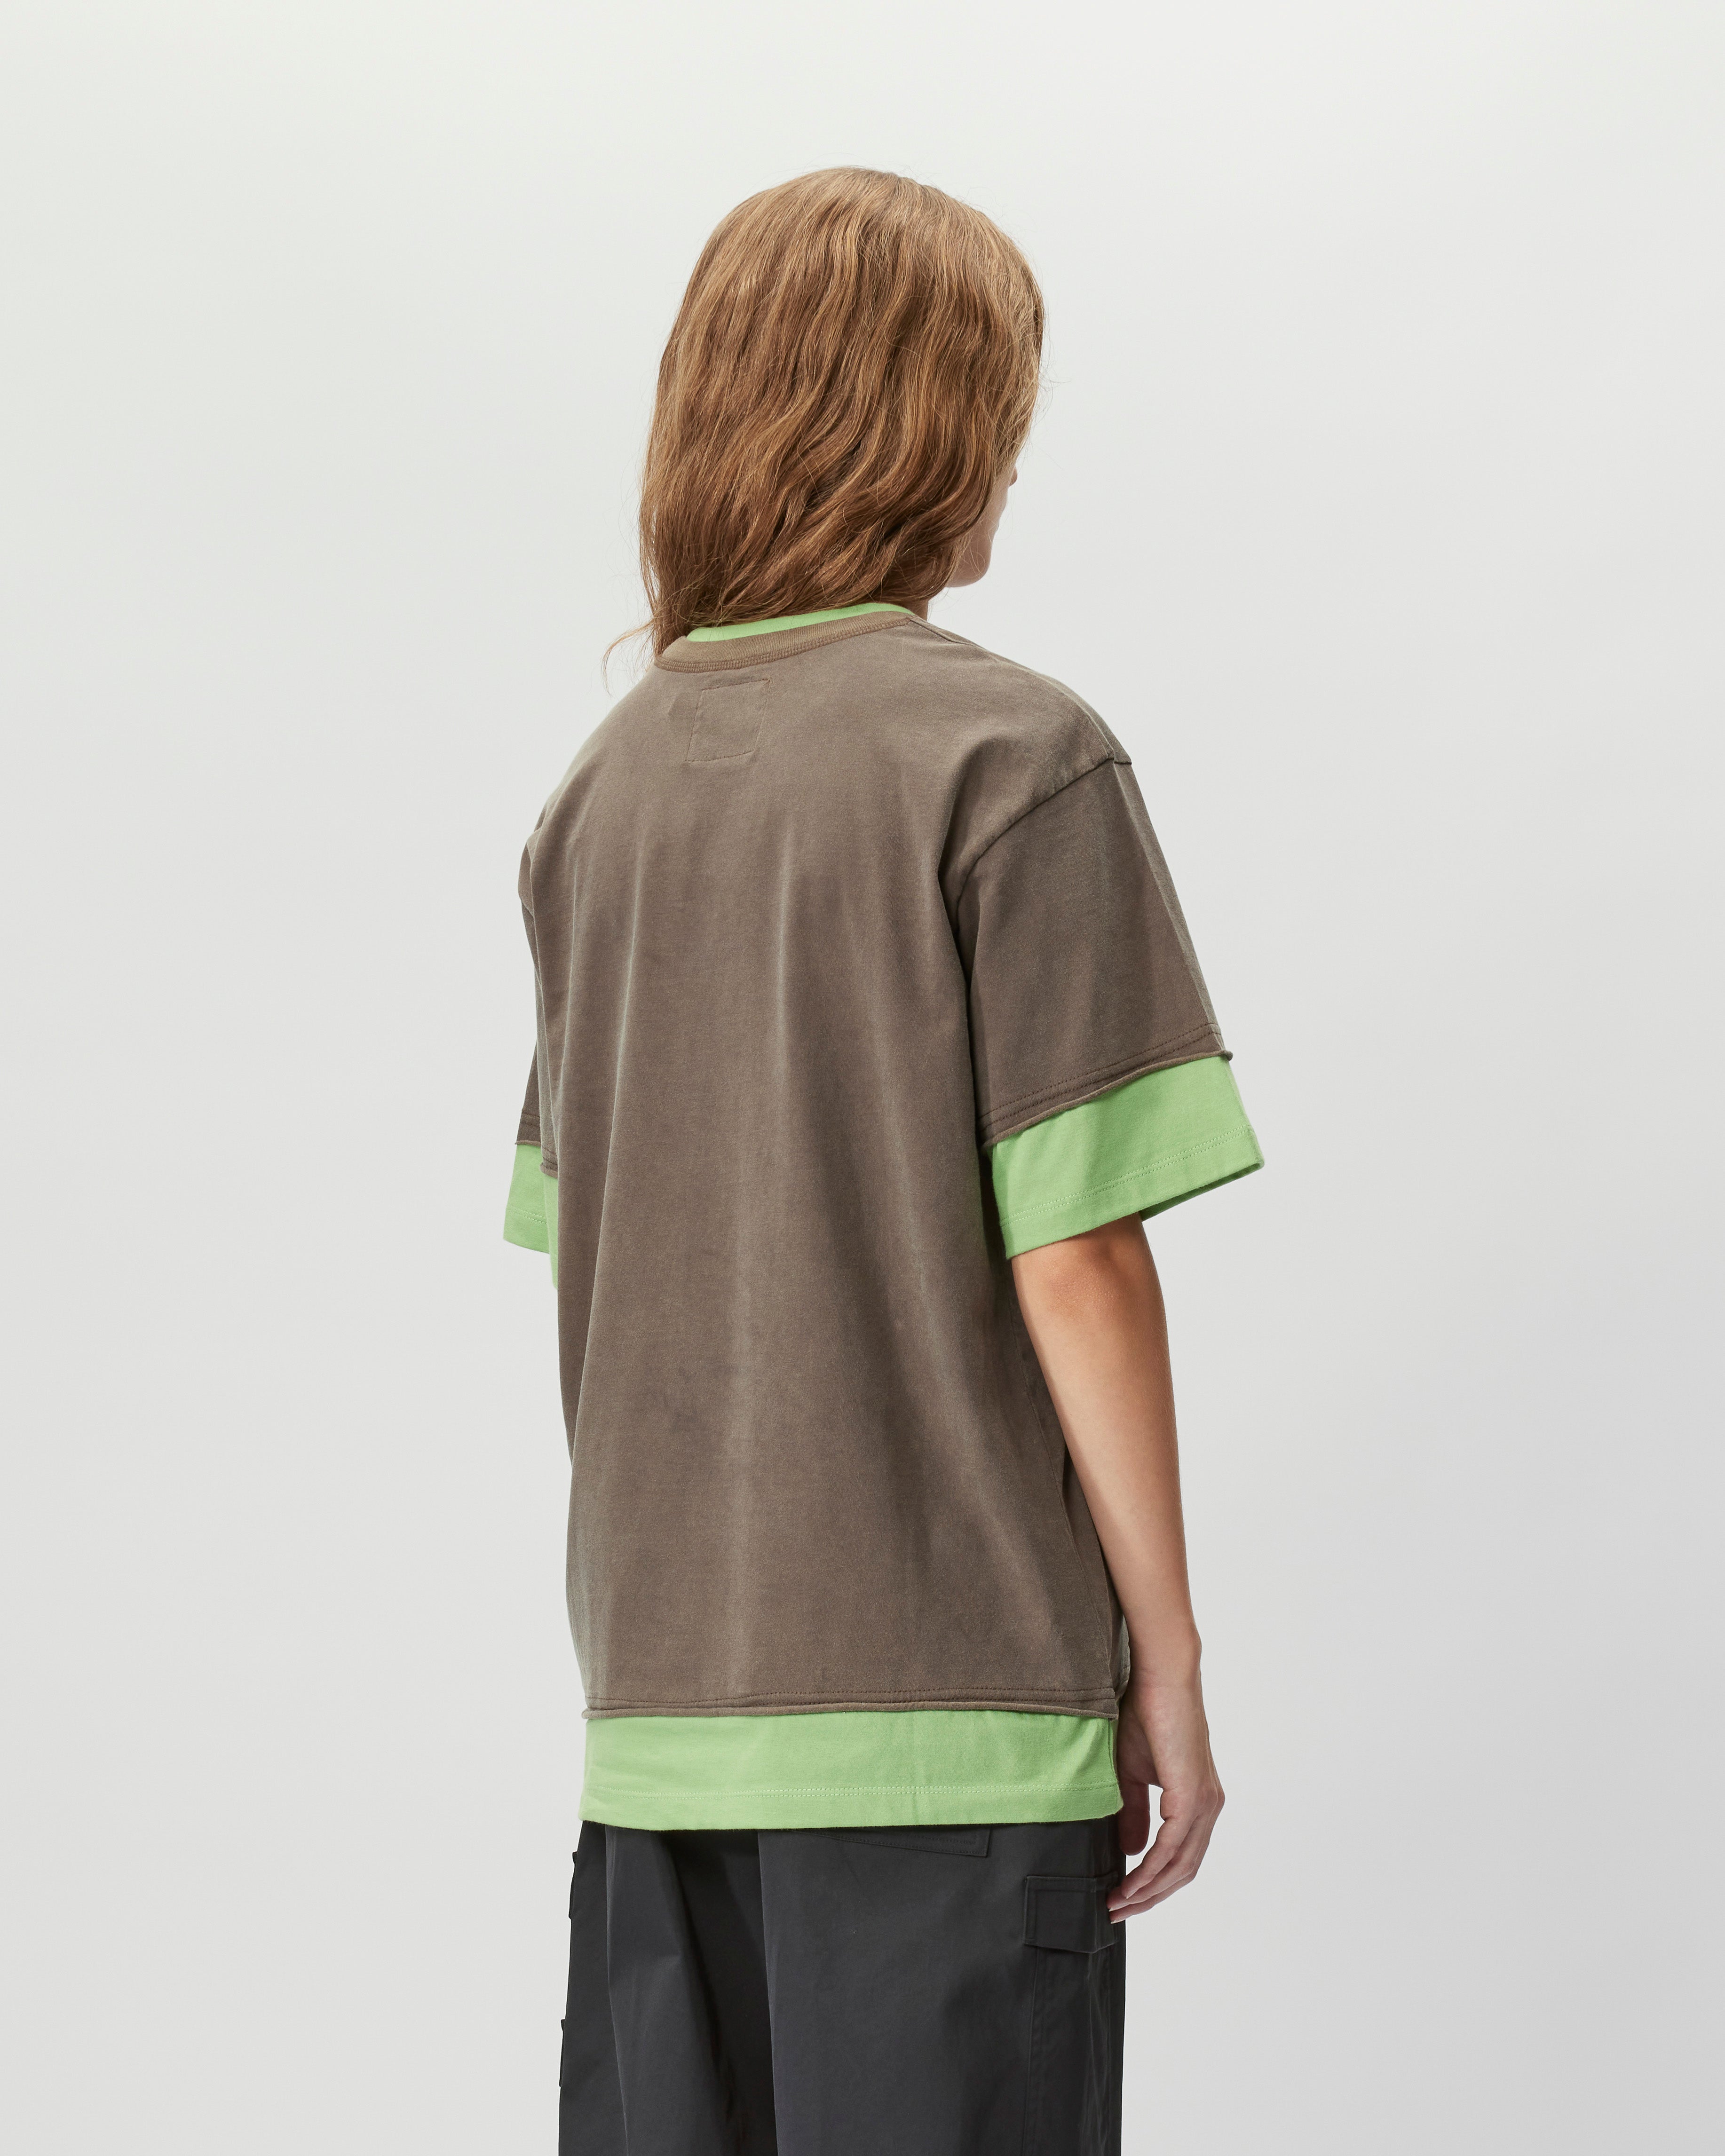 (di)vision Layered T-shirt BROWN / GREEN COMB. 050004-2